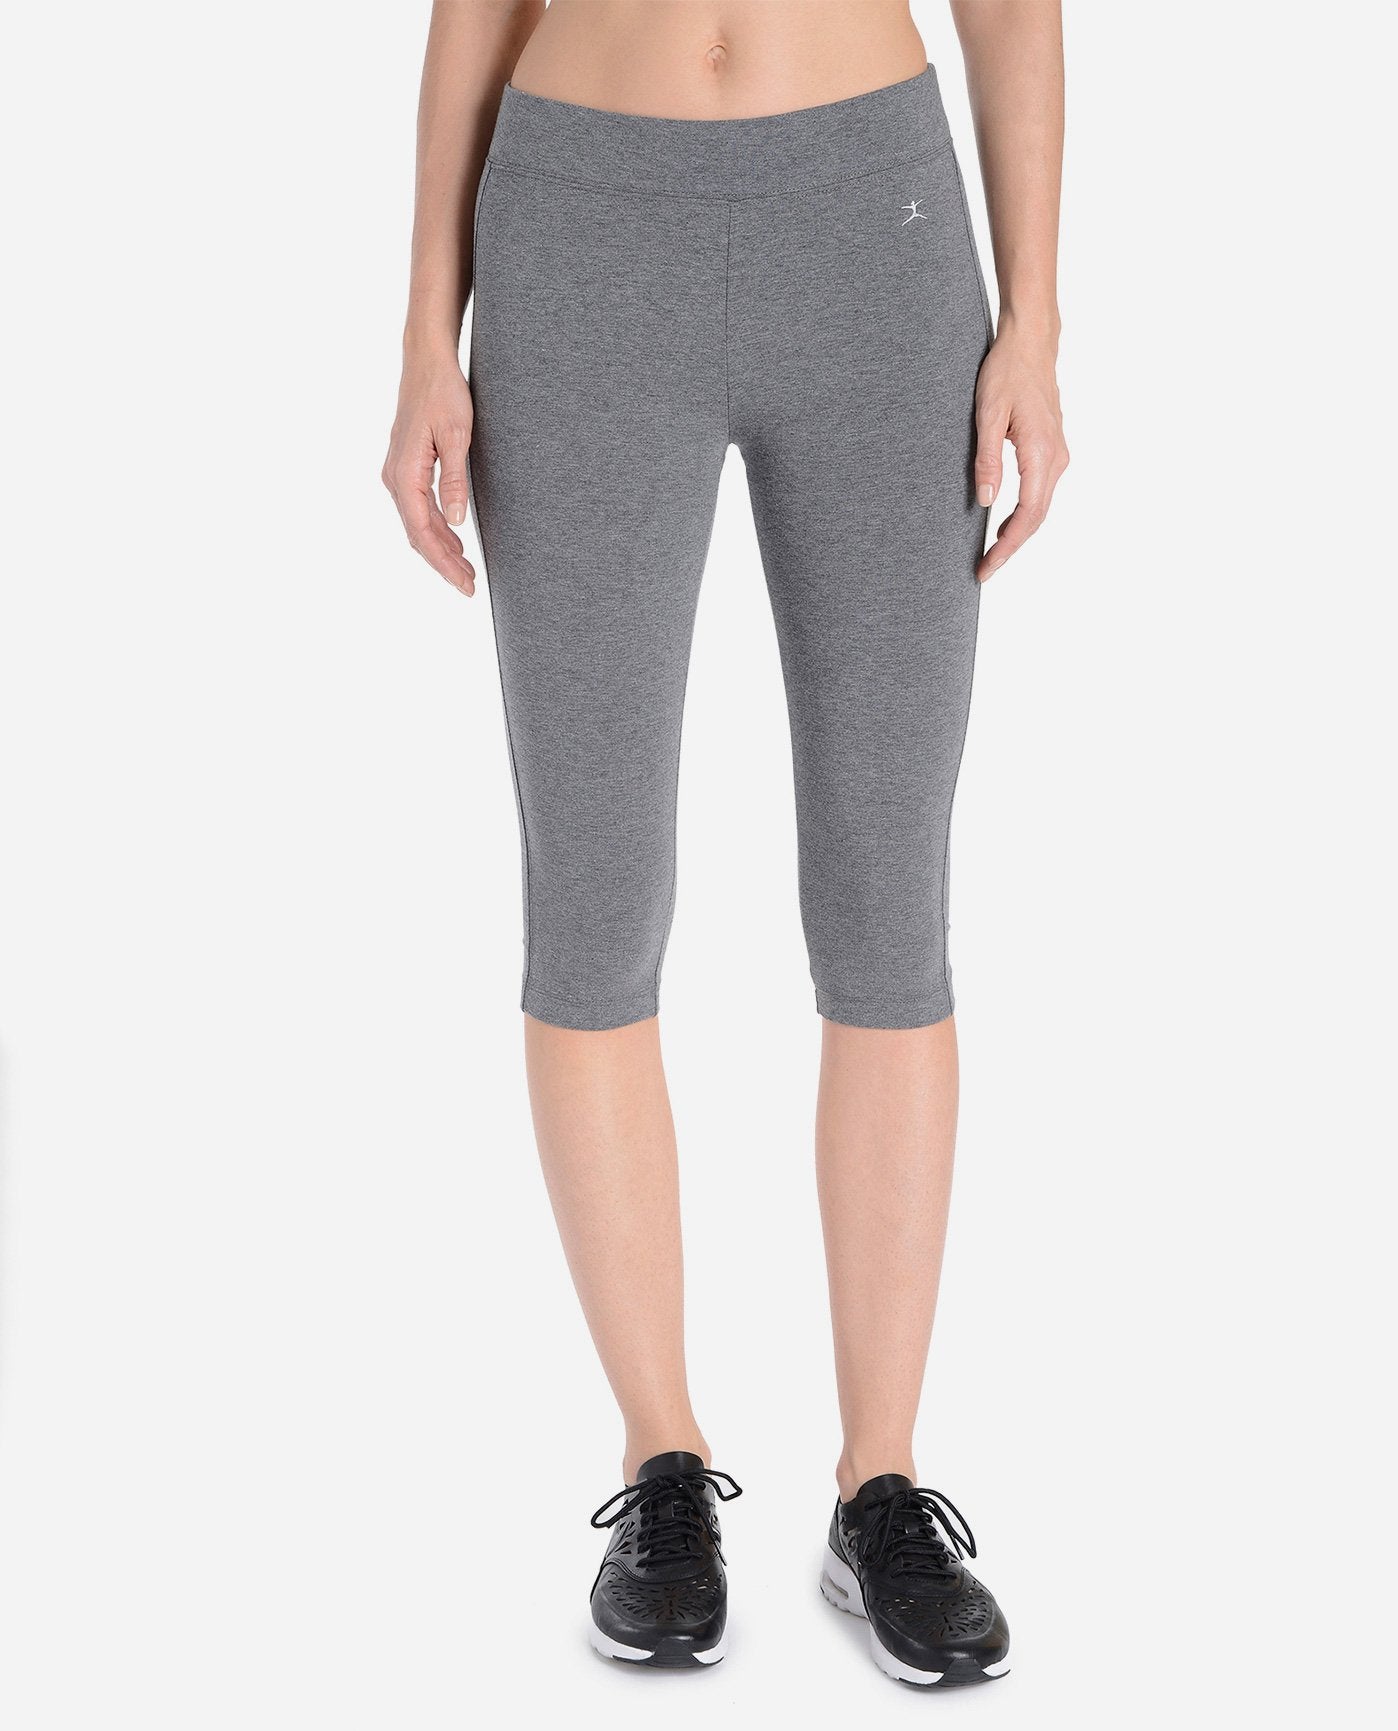 Danskin Now Gray Athletic Capri Pants | Size 12-14